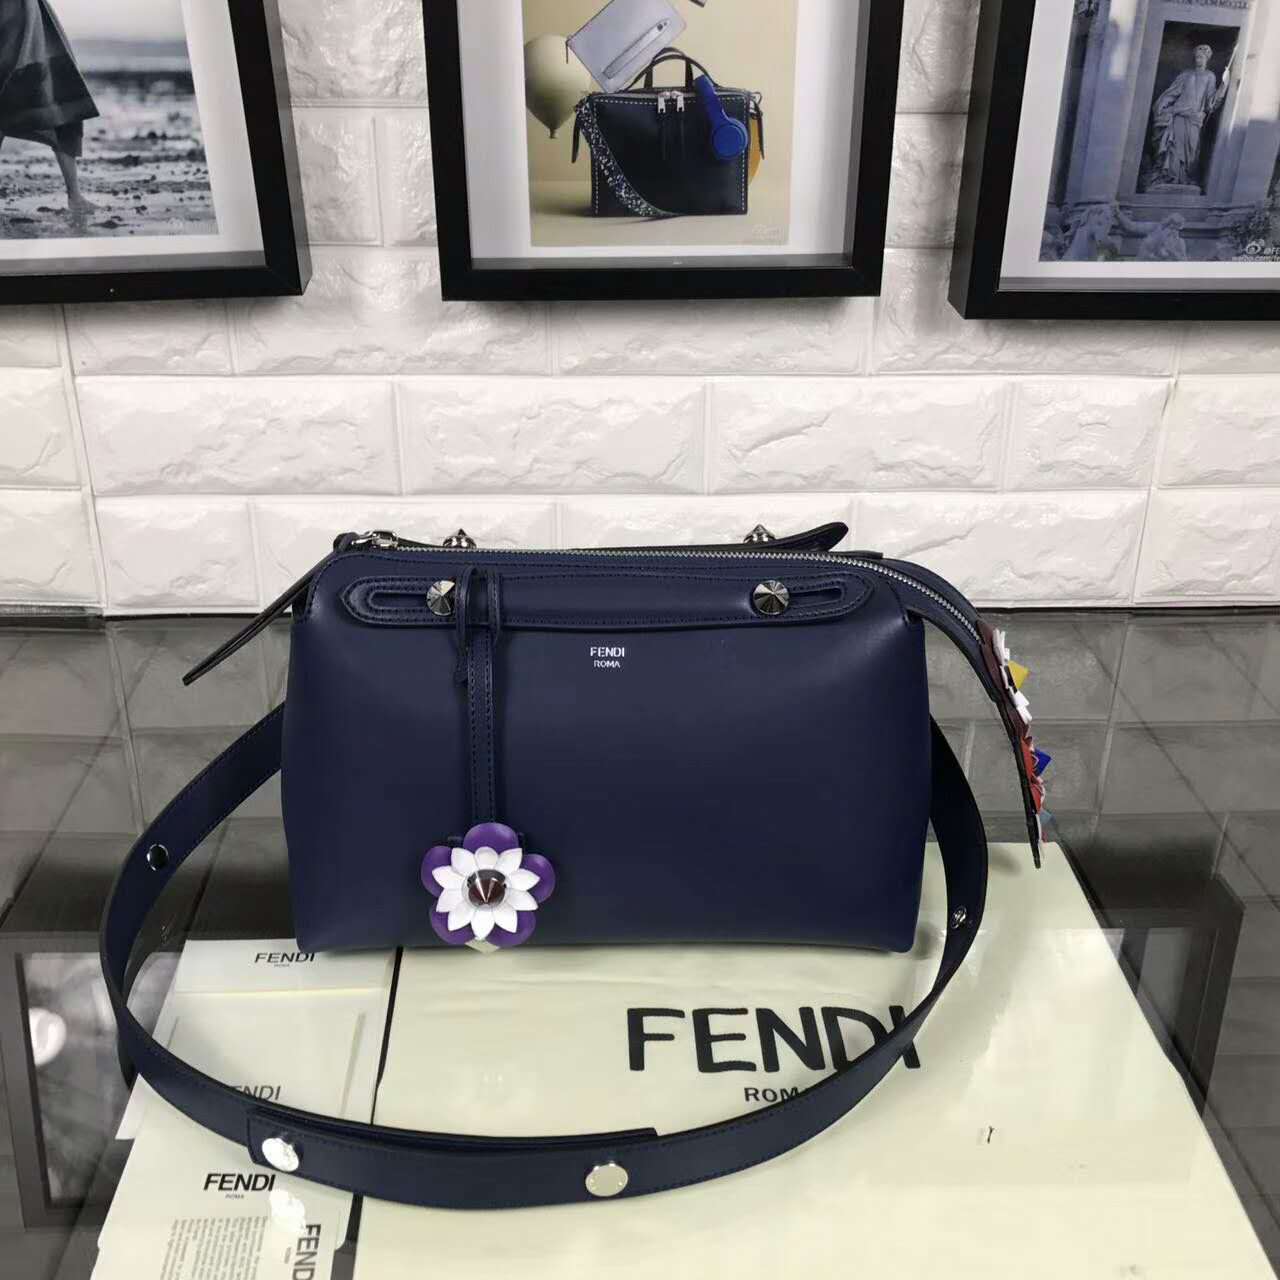 FENDI 偽物フェンディ バッグ 2017新作 ファッション 手提げショルダーバッグ 2785